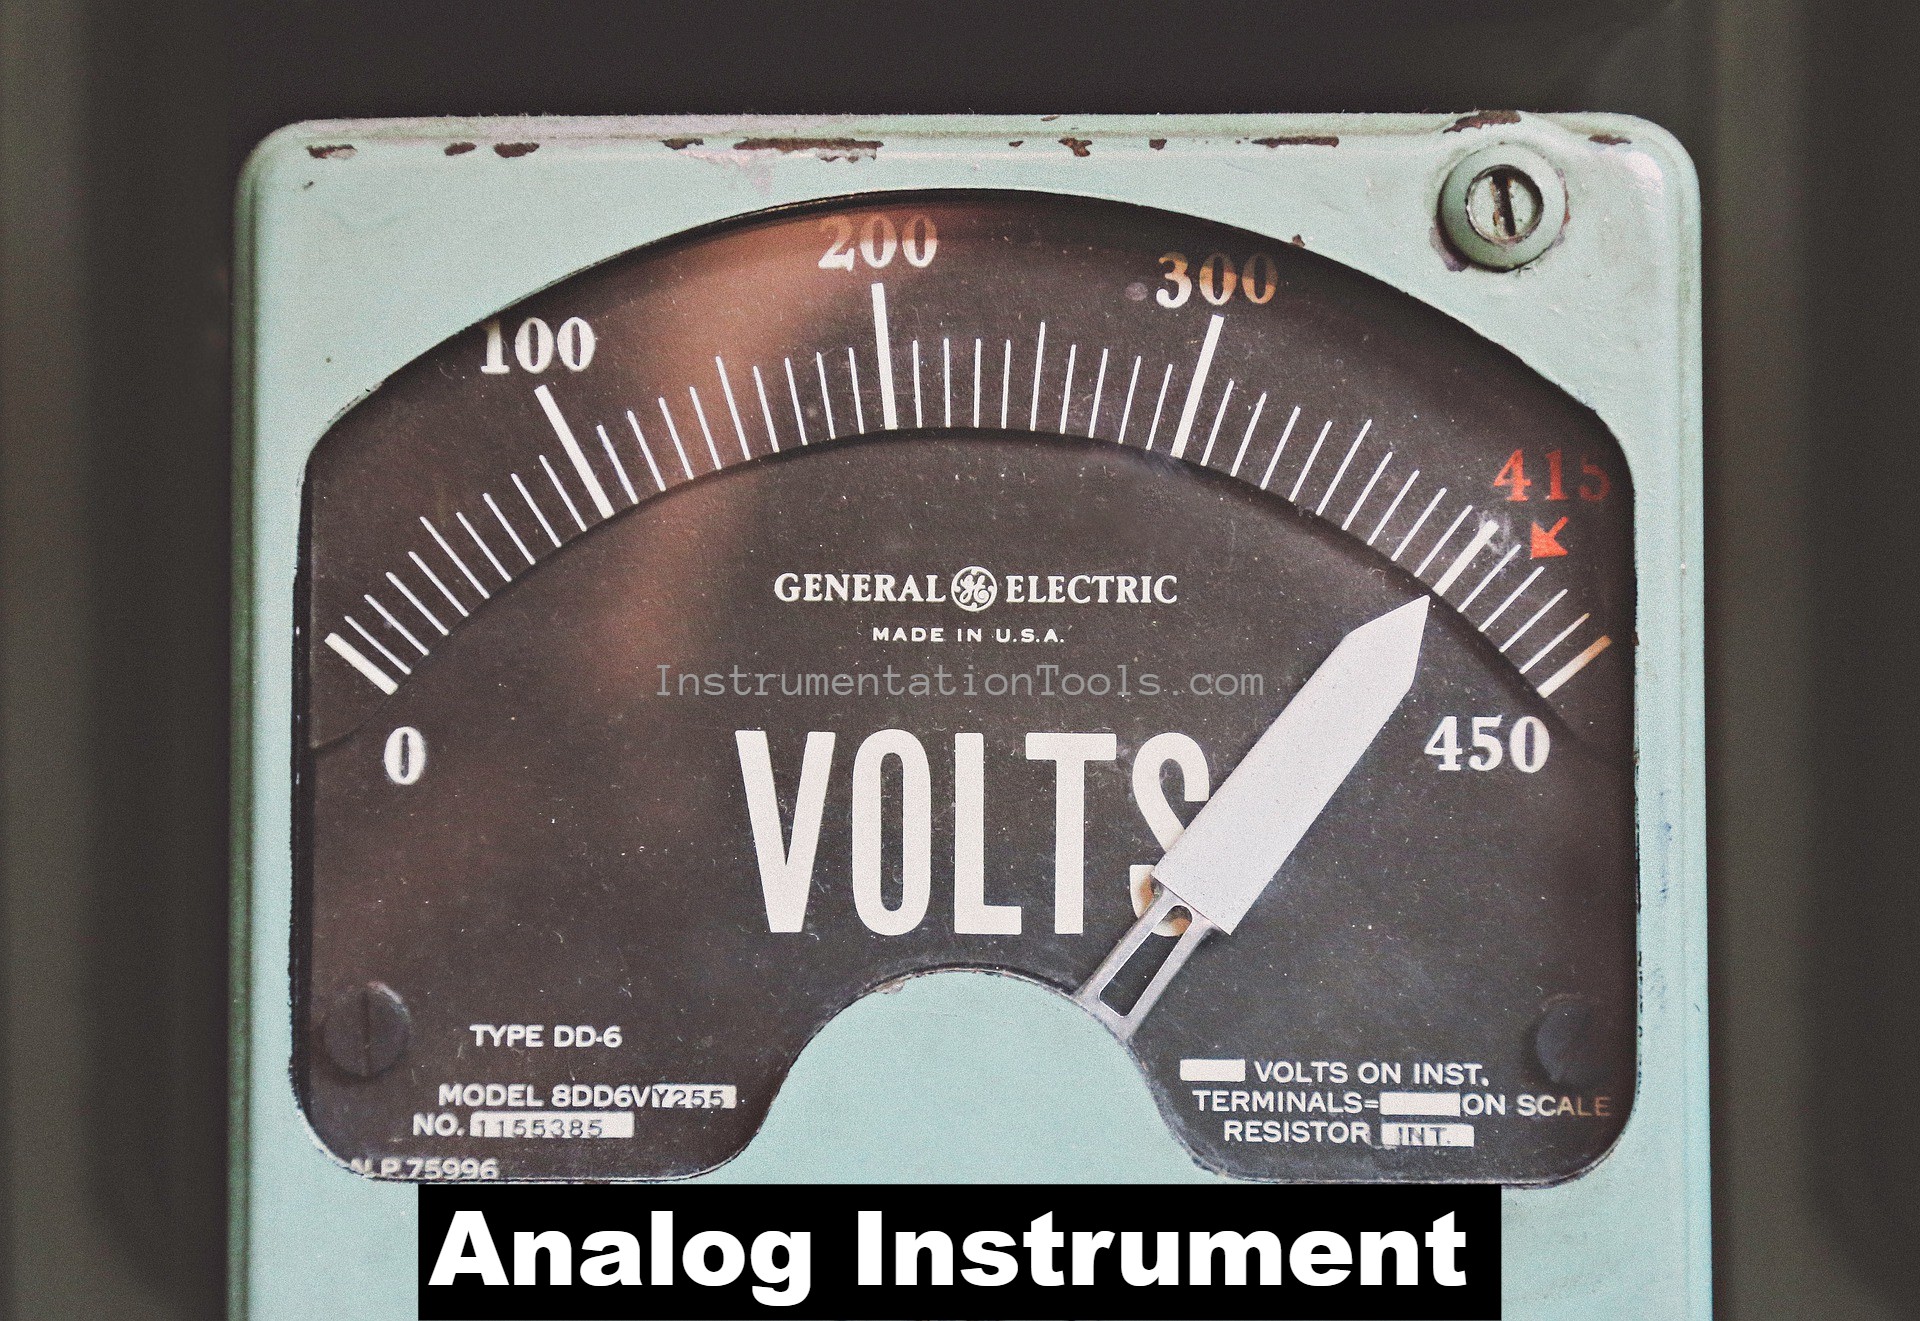 Analog Instrument Example